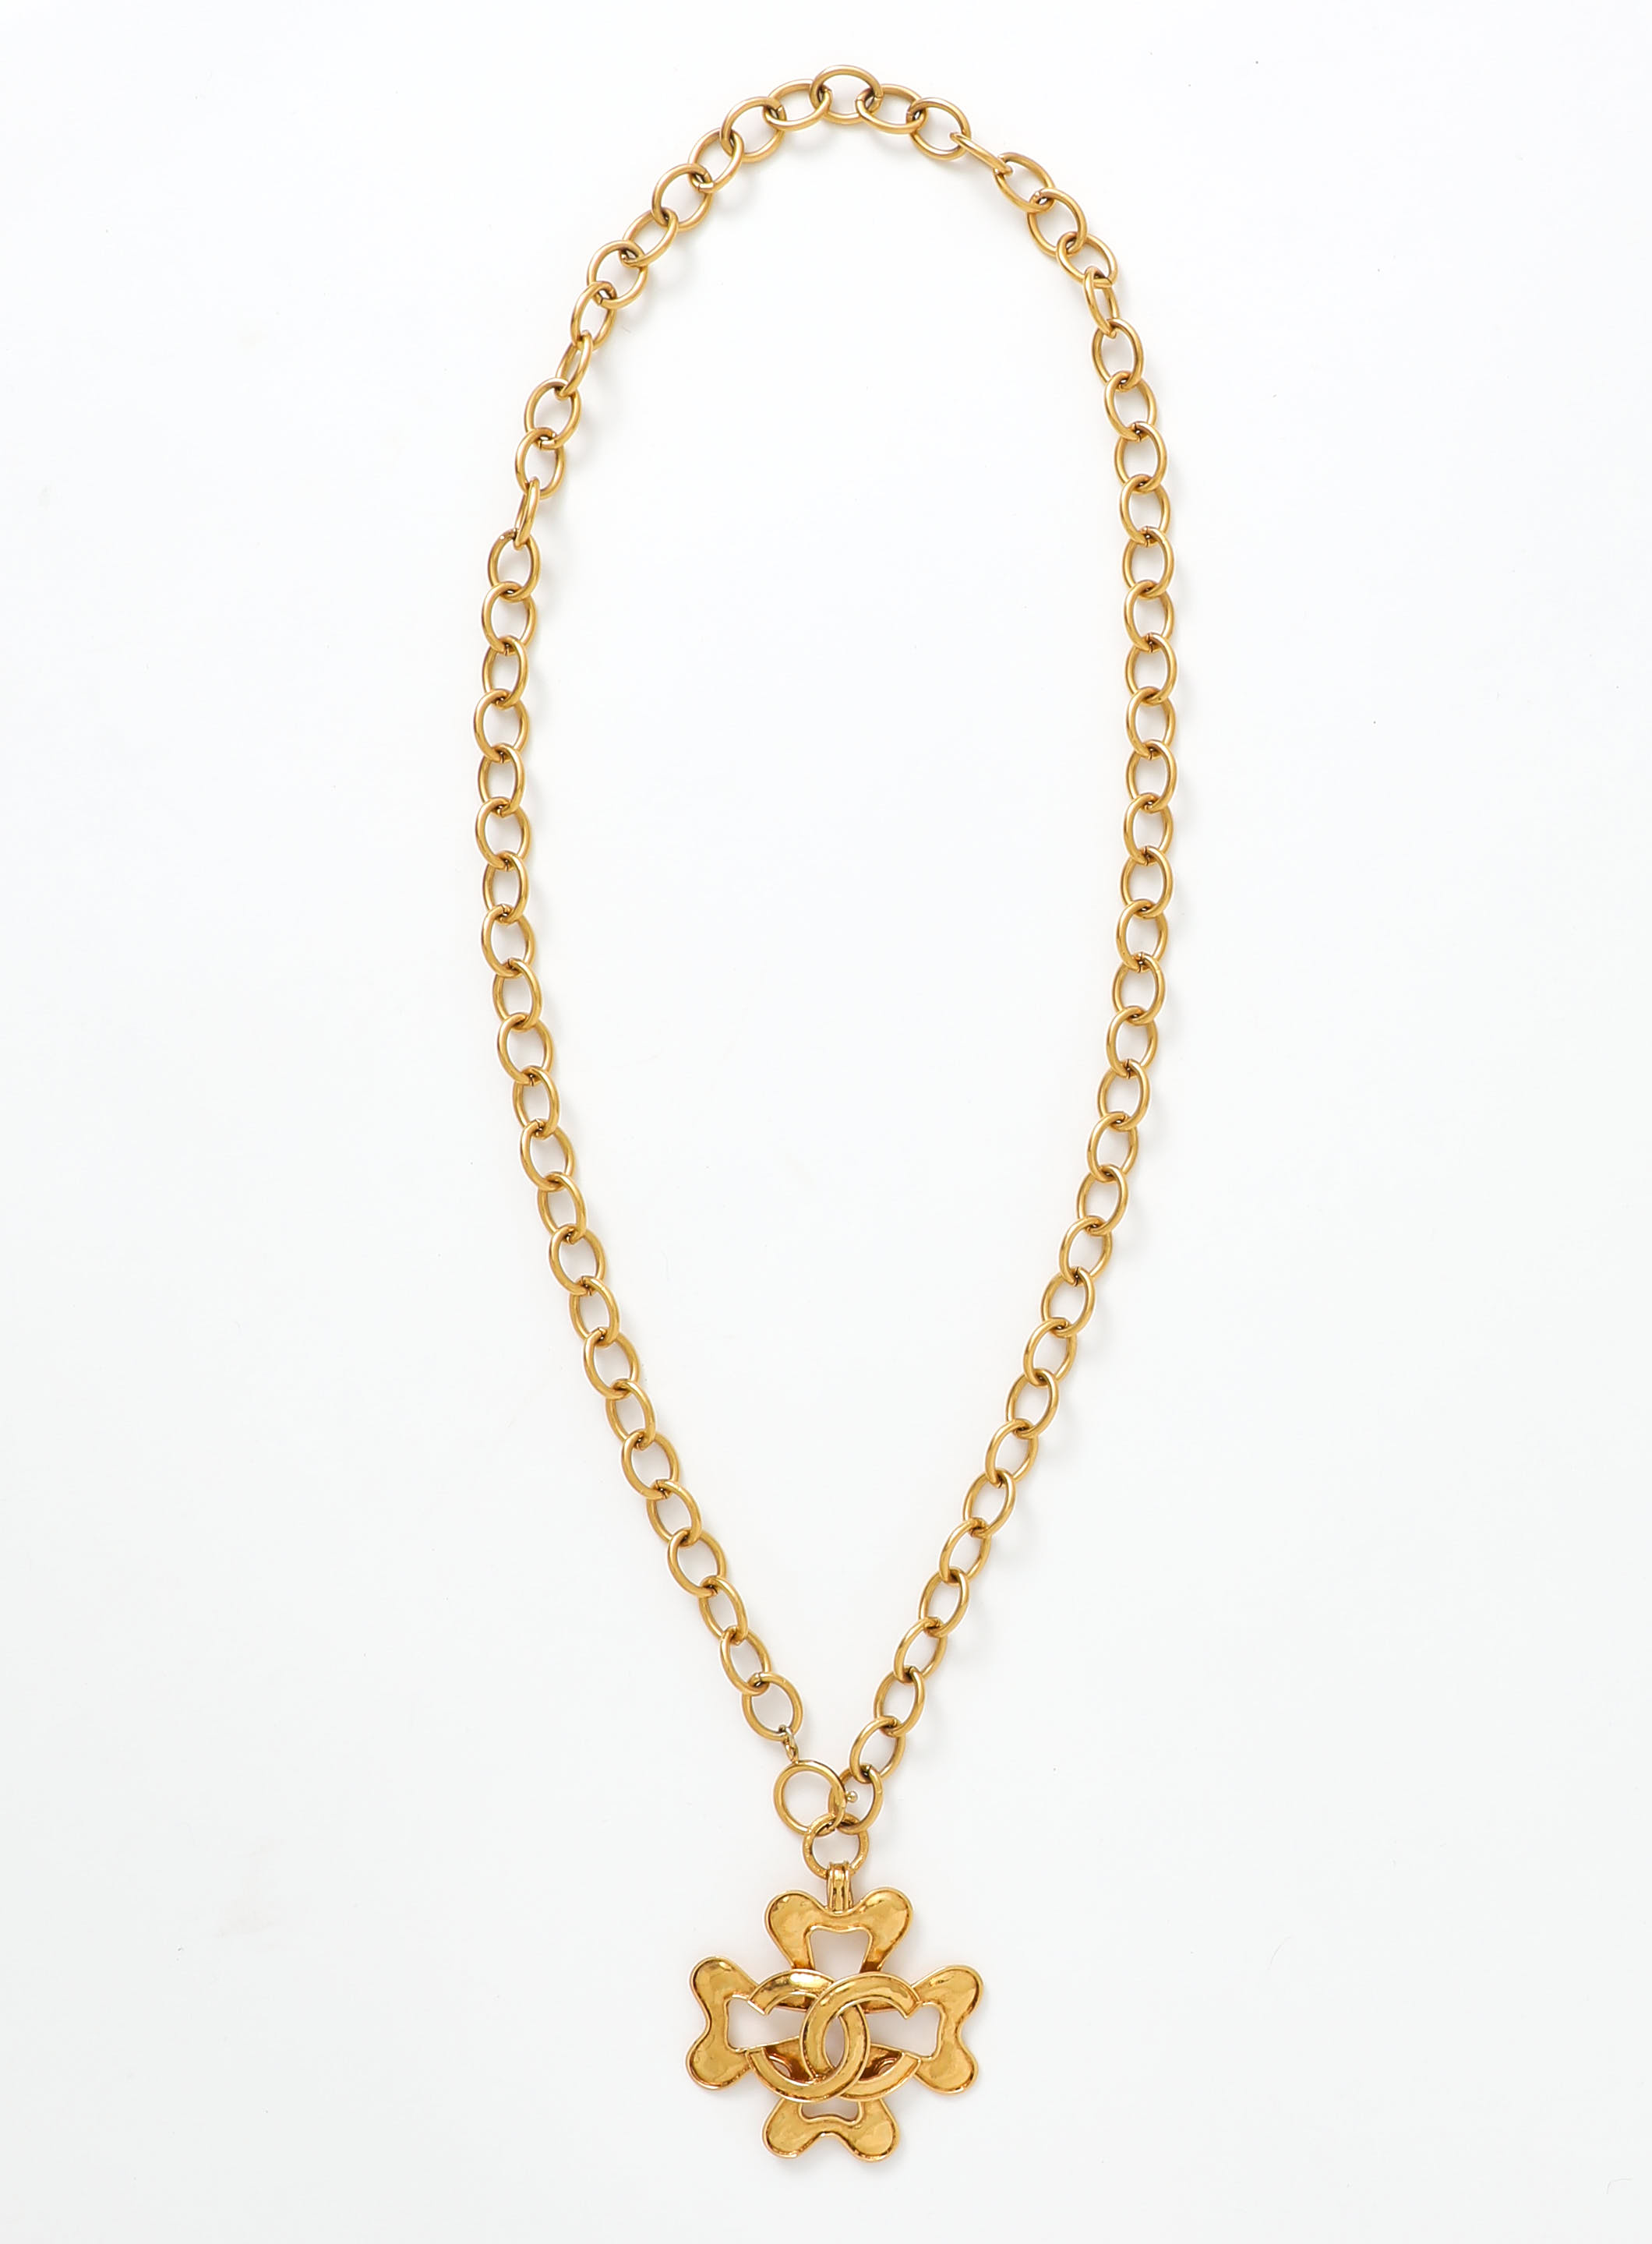 Chanel necklace heart clover - Gem